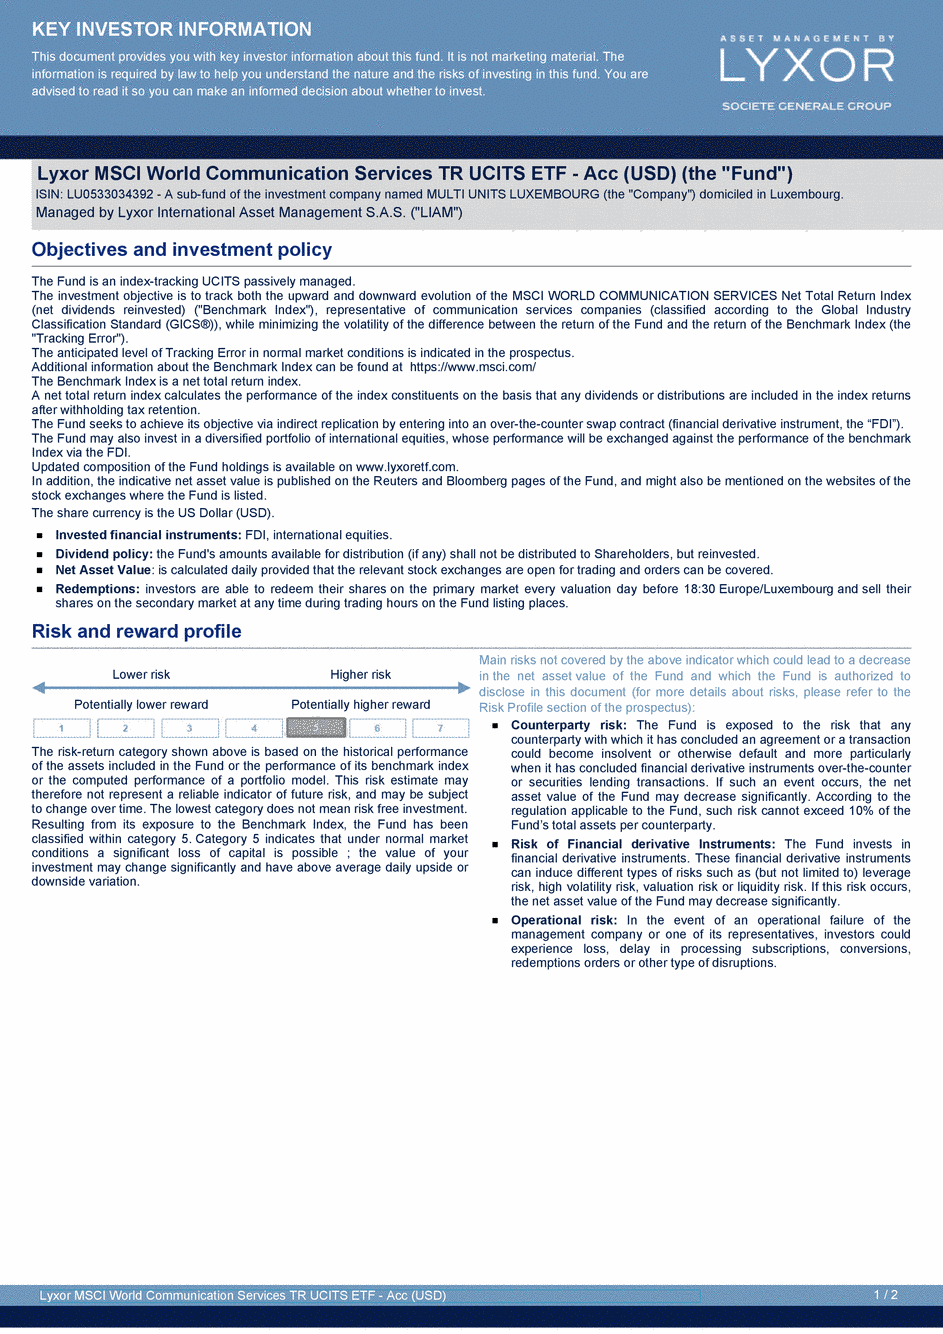 DICI Lyxor MSCI World Communication Services TR UCITS ETF - Acc (USD) - 10/07/2020 - English